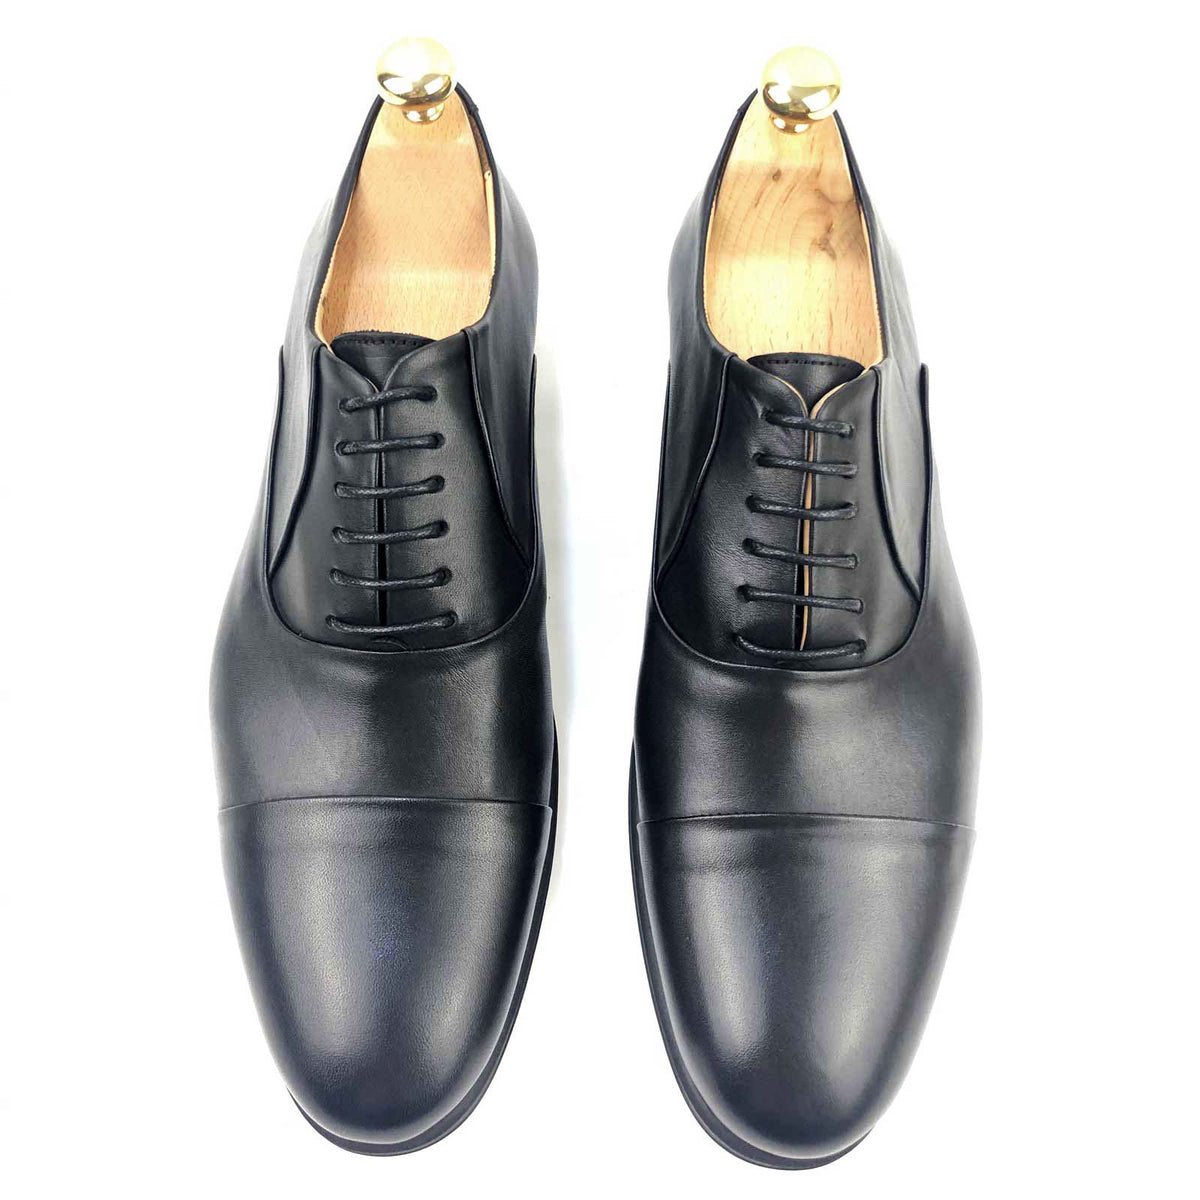 CH1321-015 - Chaussure cuir NOIR - deluxe-maroc